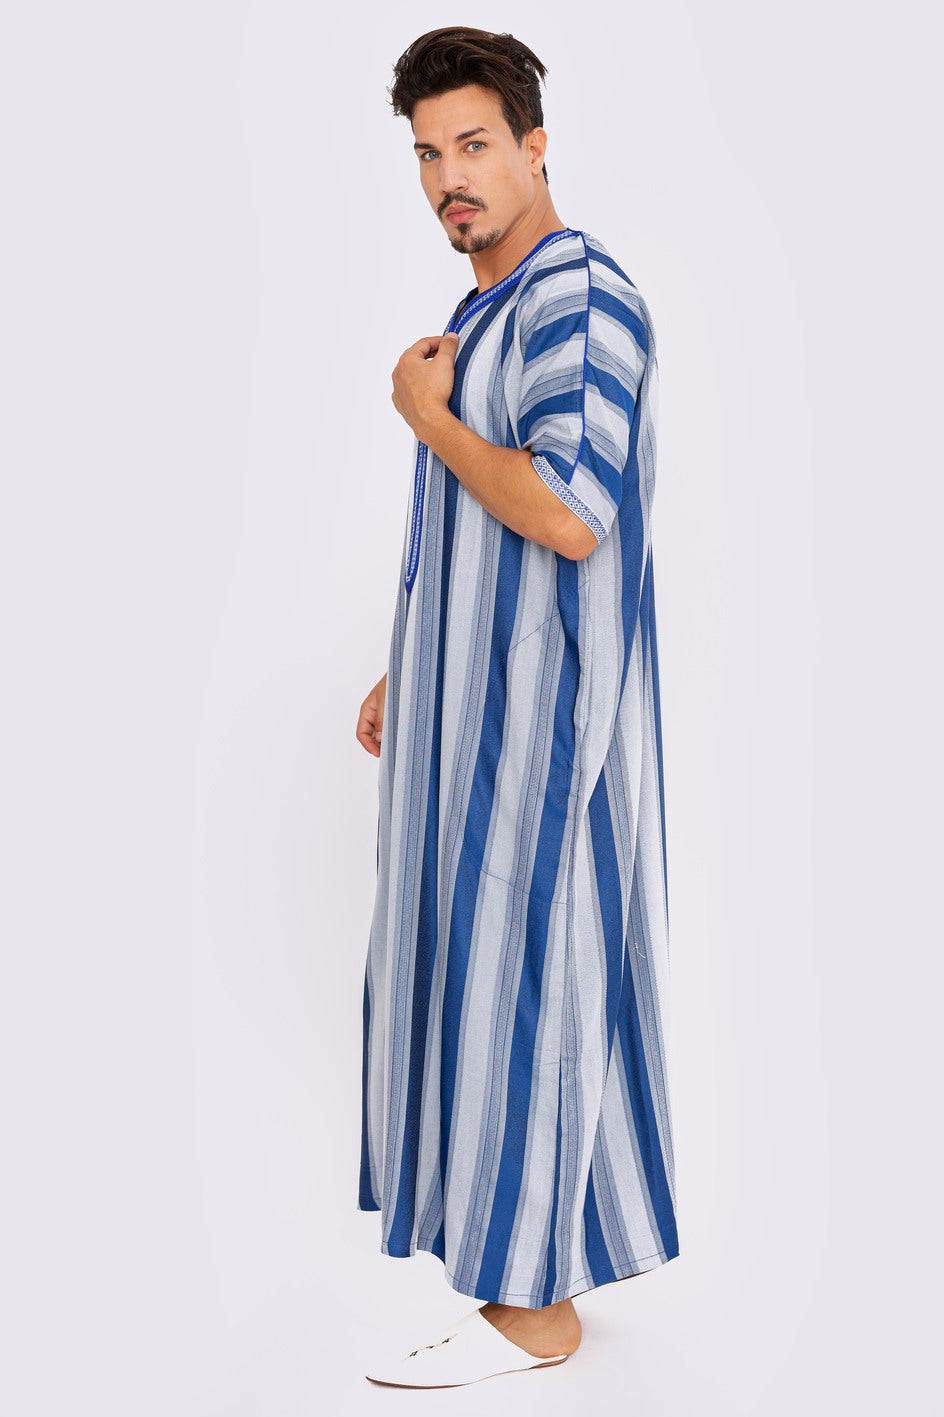 Gandoura Men's Short Sleeve Long Striped Thobe in Grey & Blue